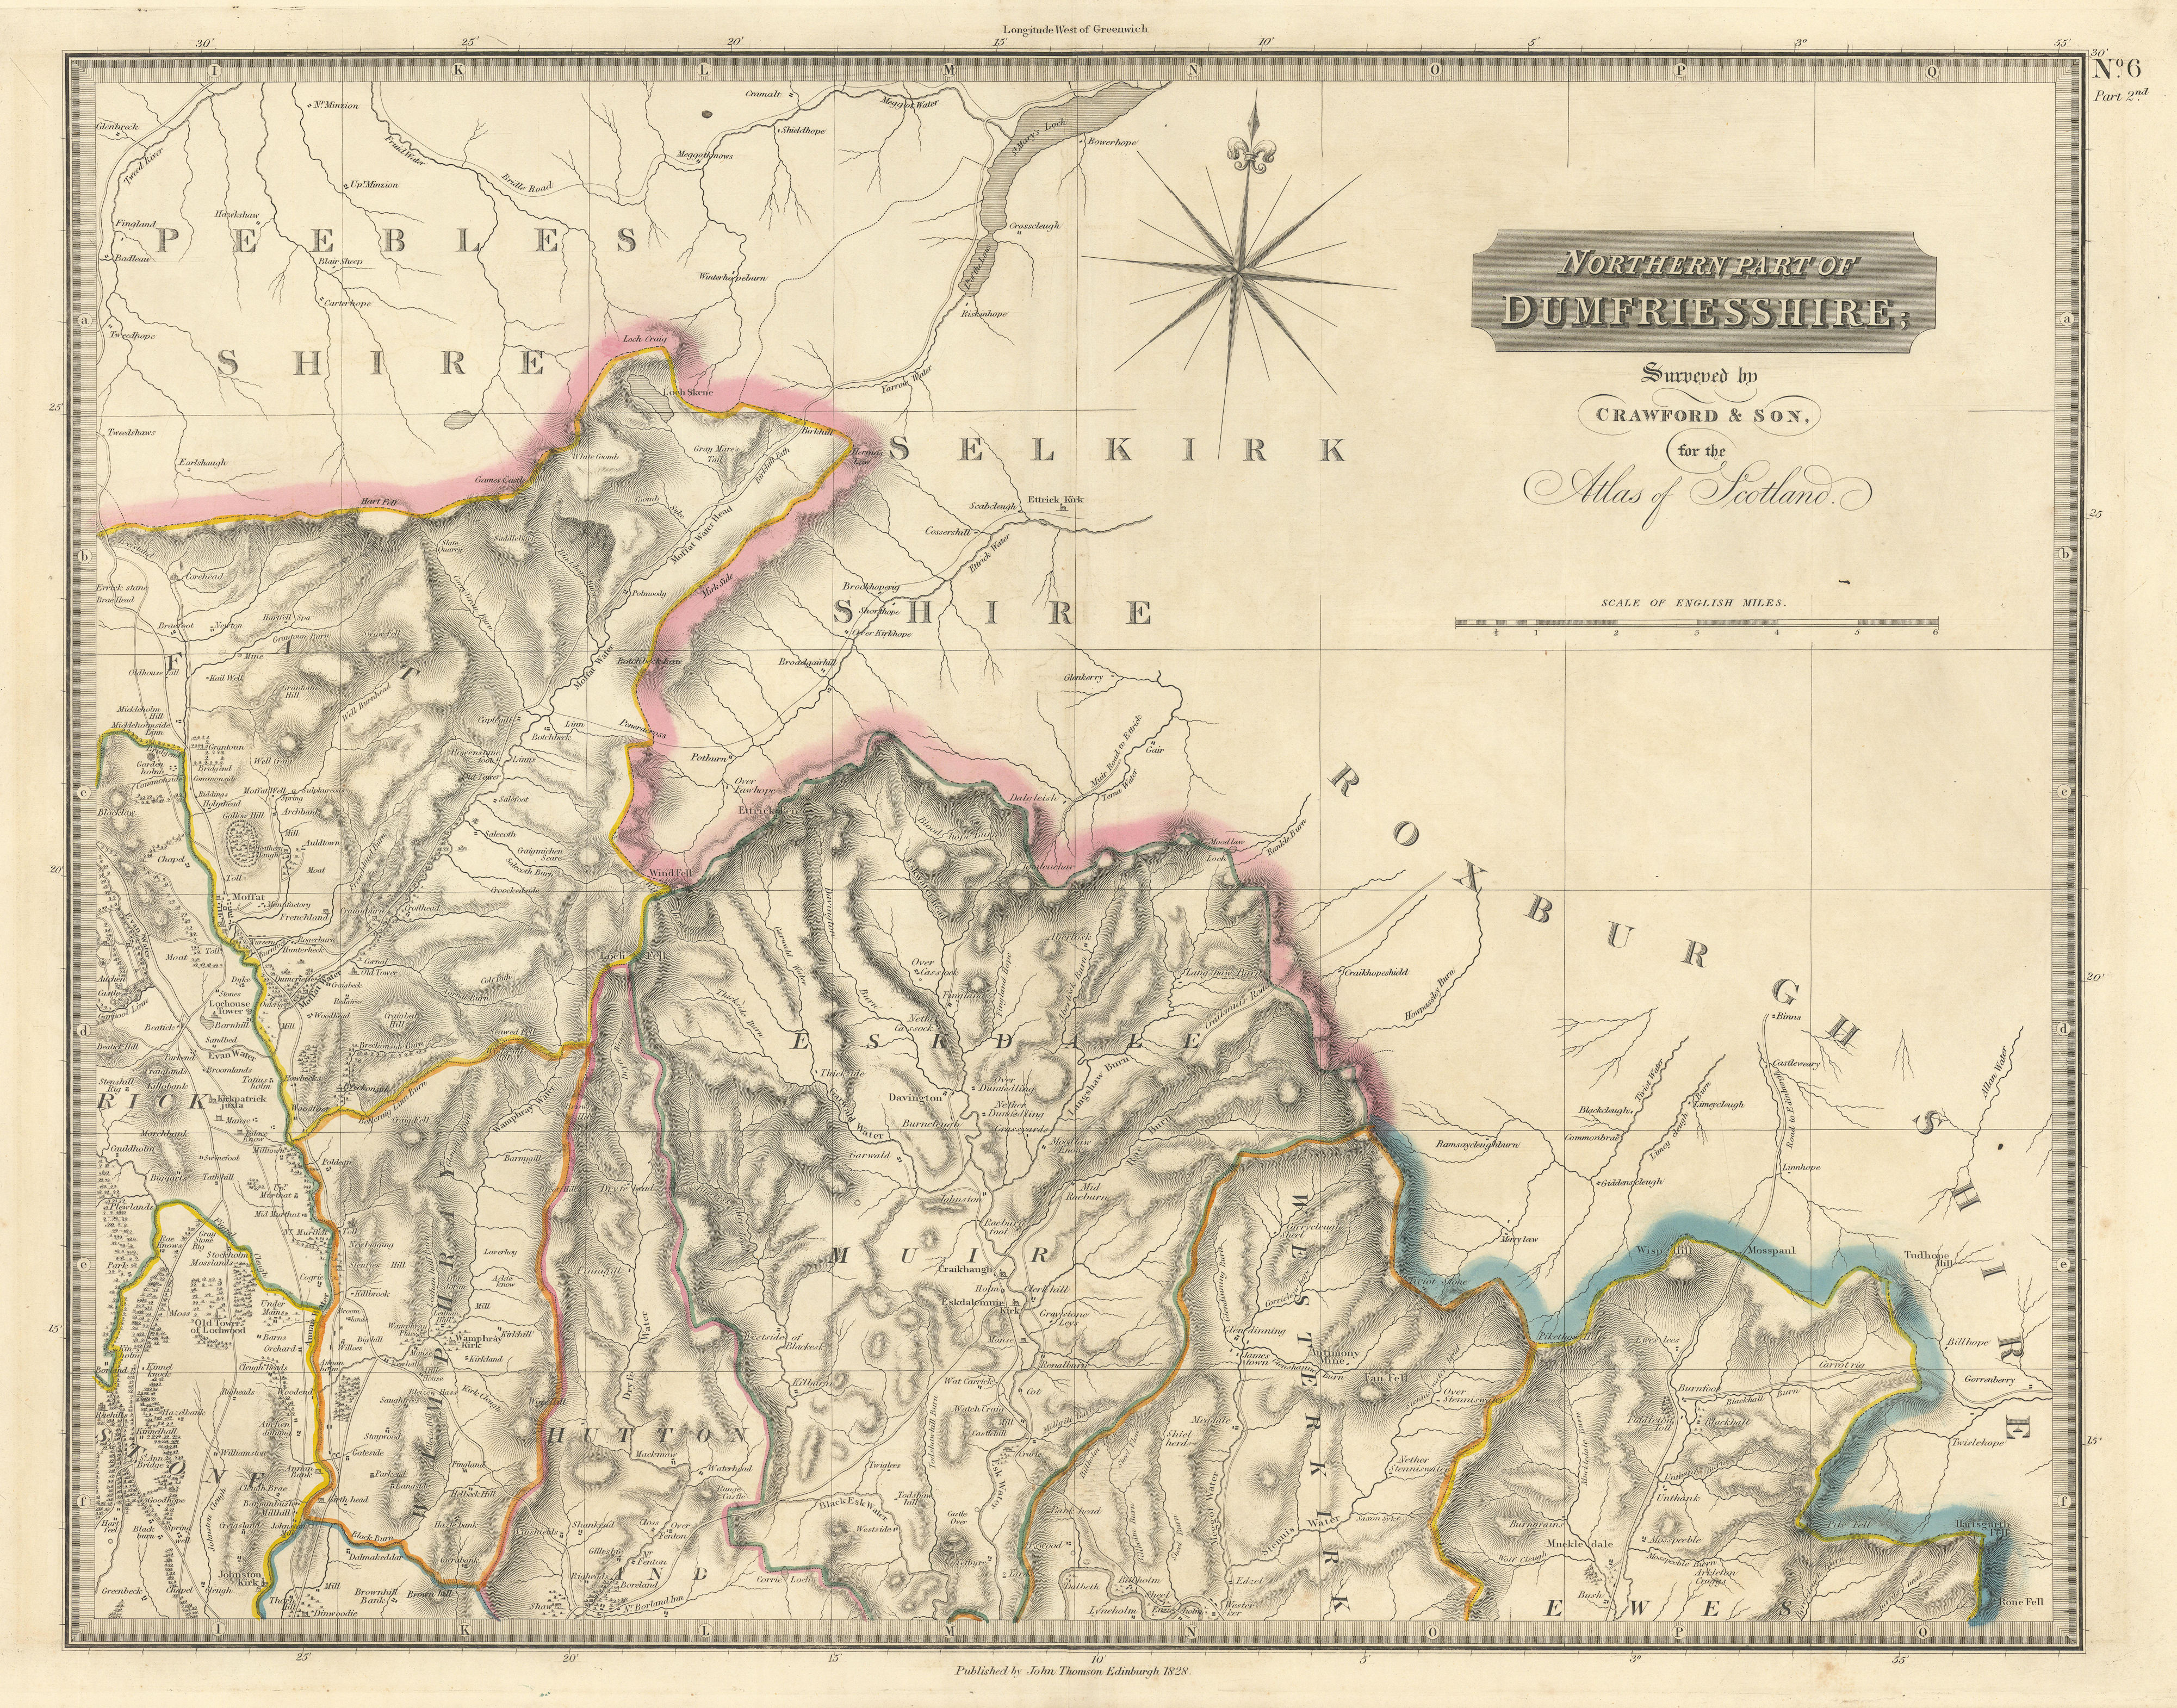 Associate Product Dumfrieshire north-east sheet. Moffat Ettrick Beattock. THOMSON 1832 old map